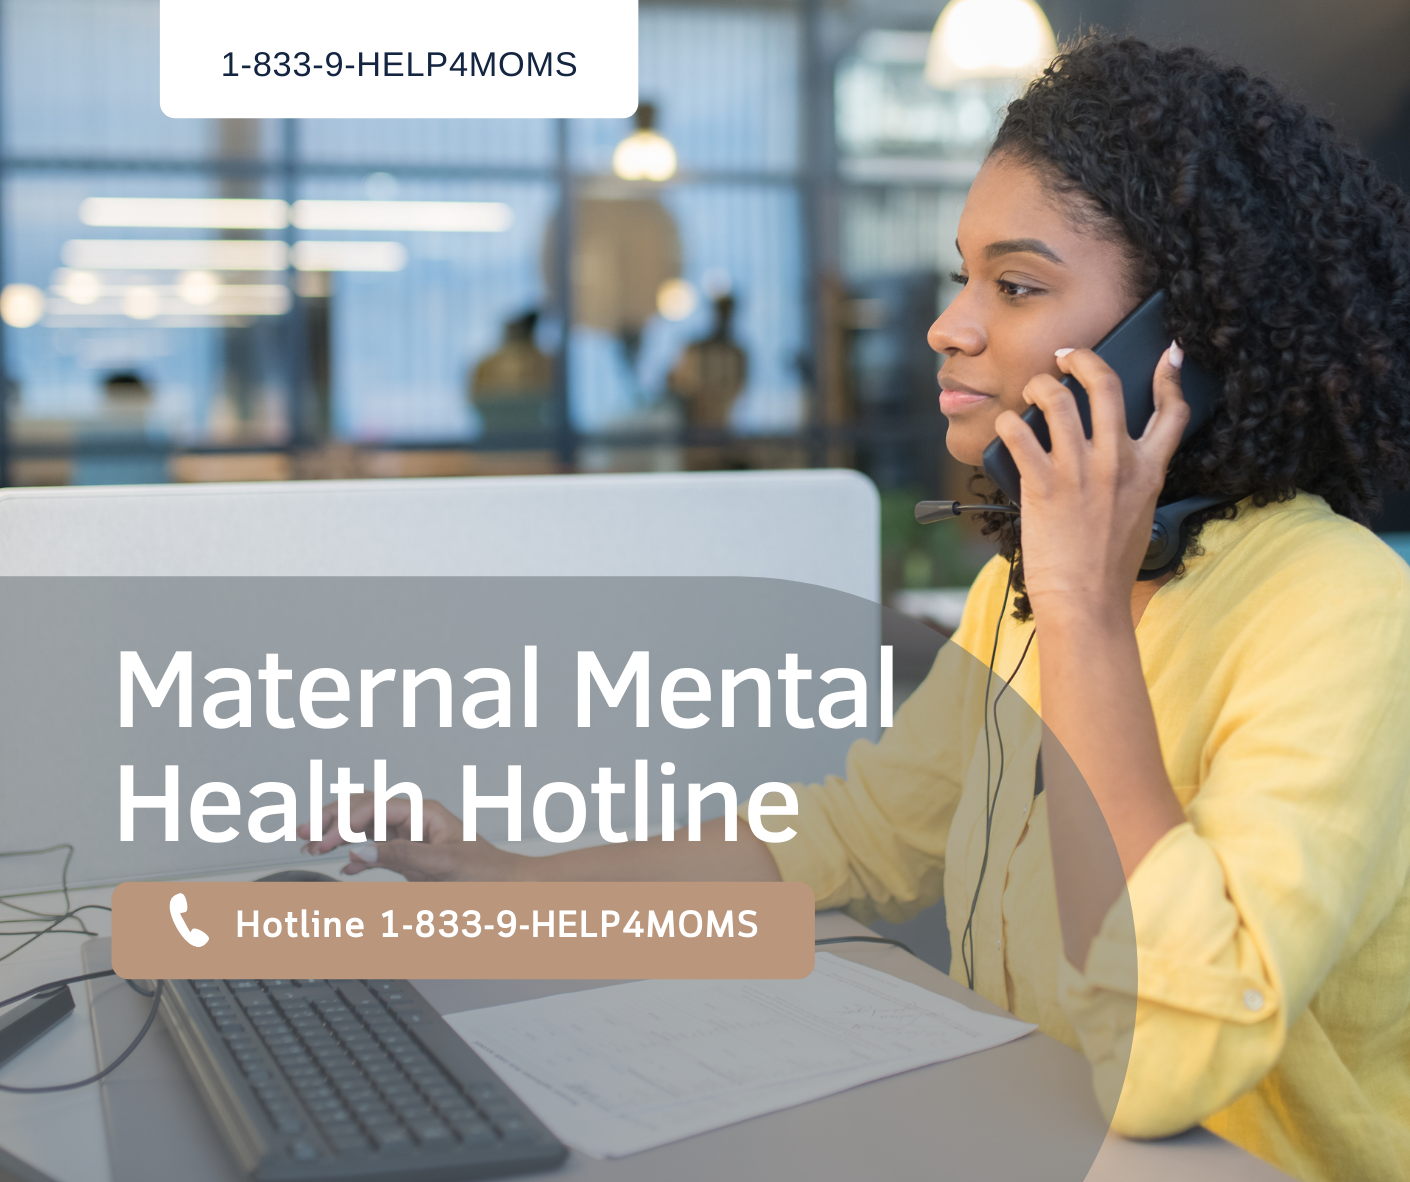 New Maternal Mental Health Hotline